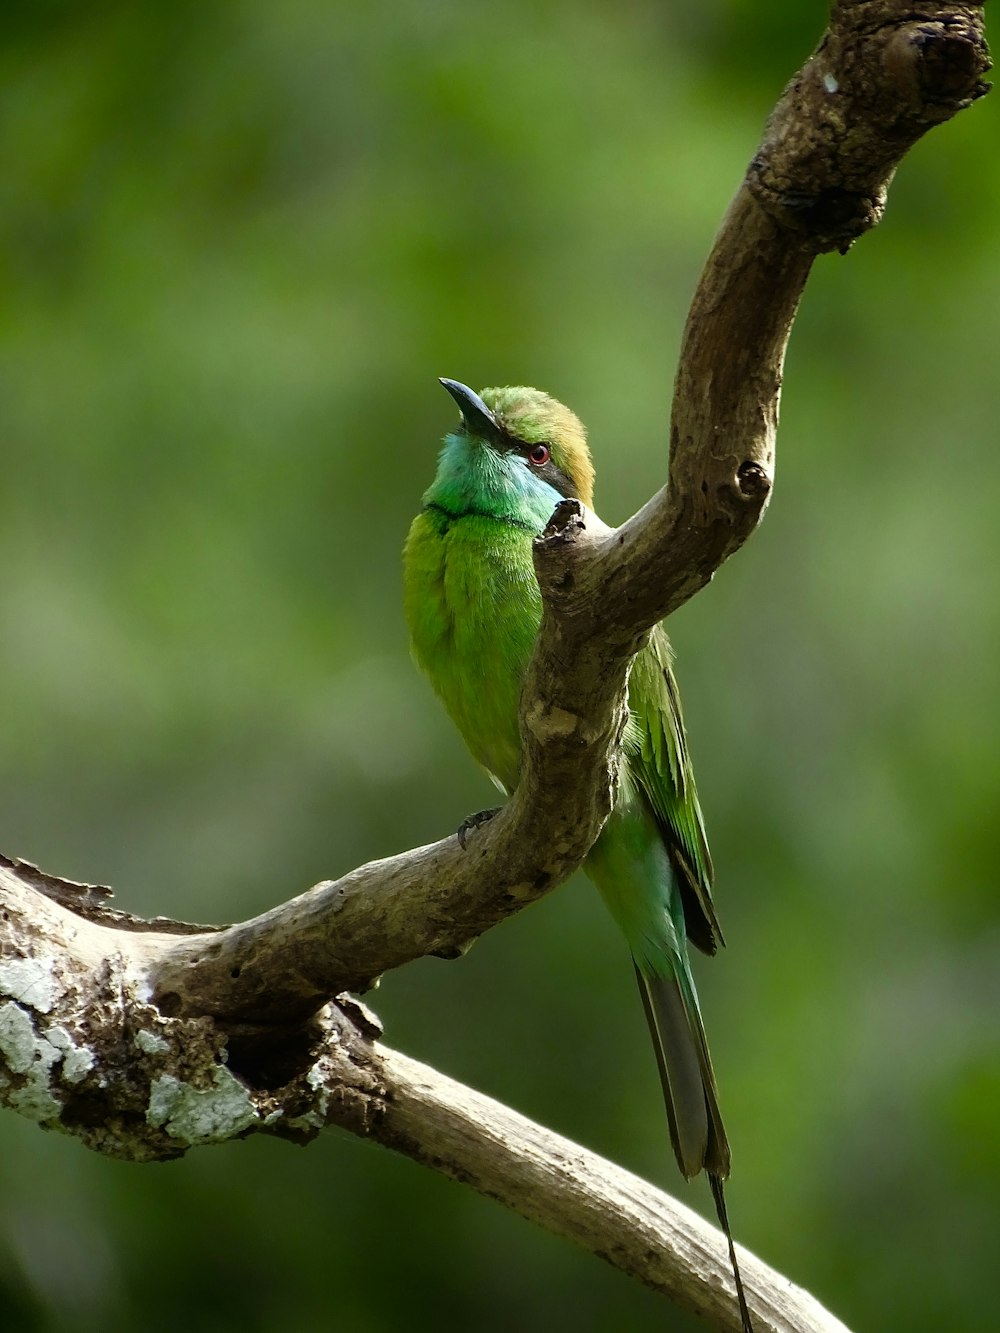 a green bird sitting on a tree branch